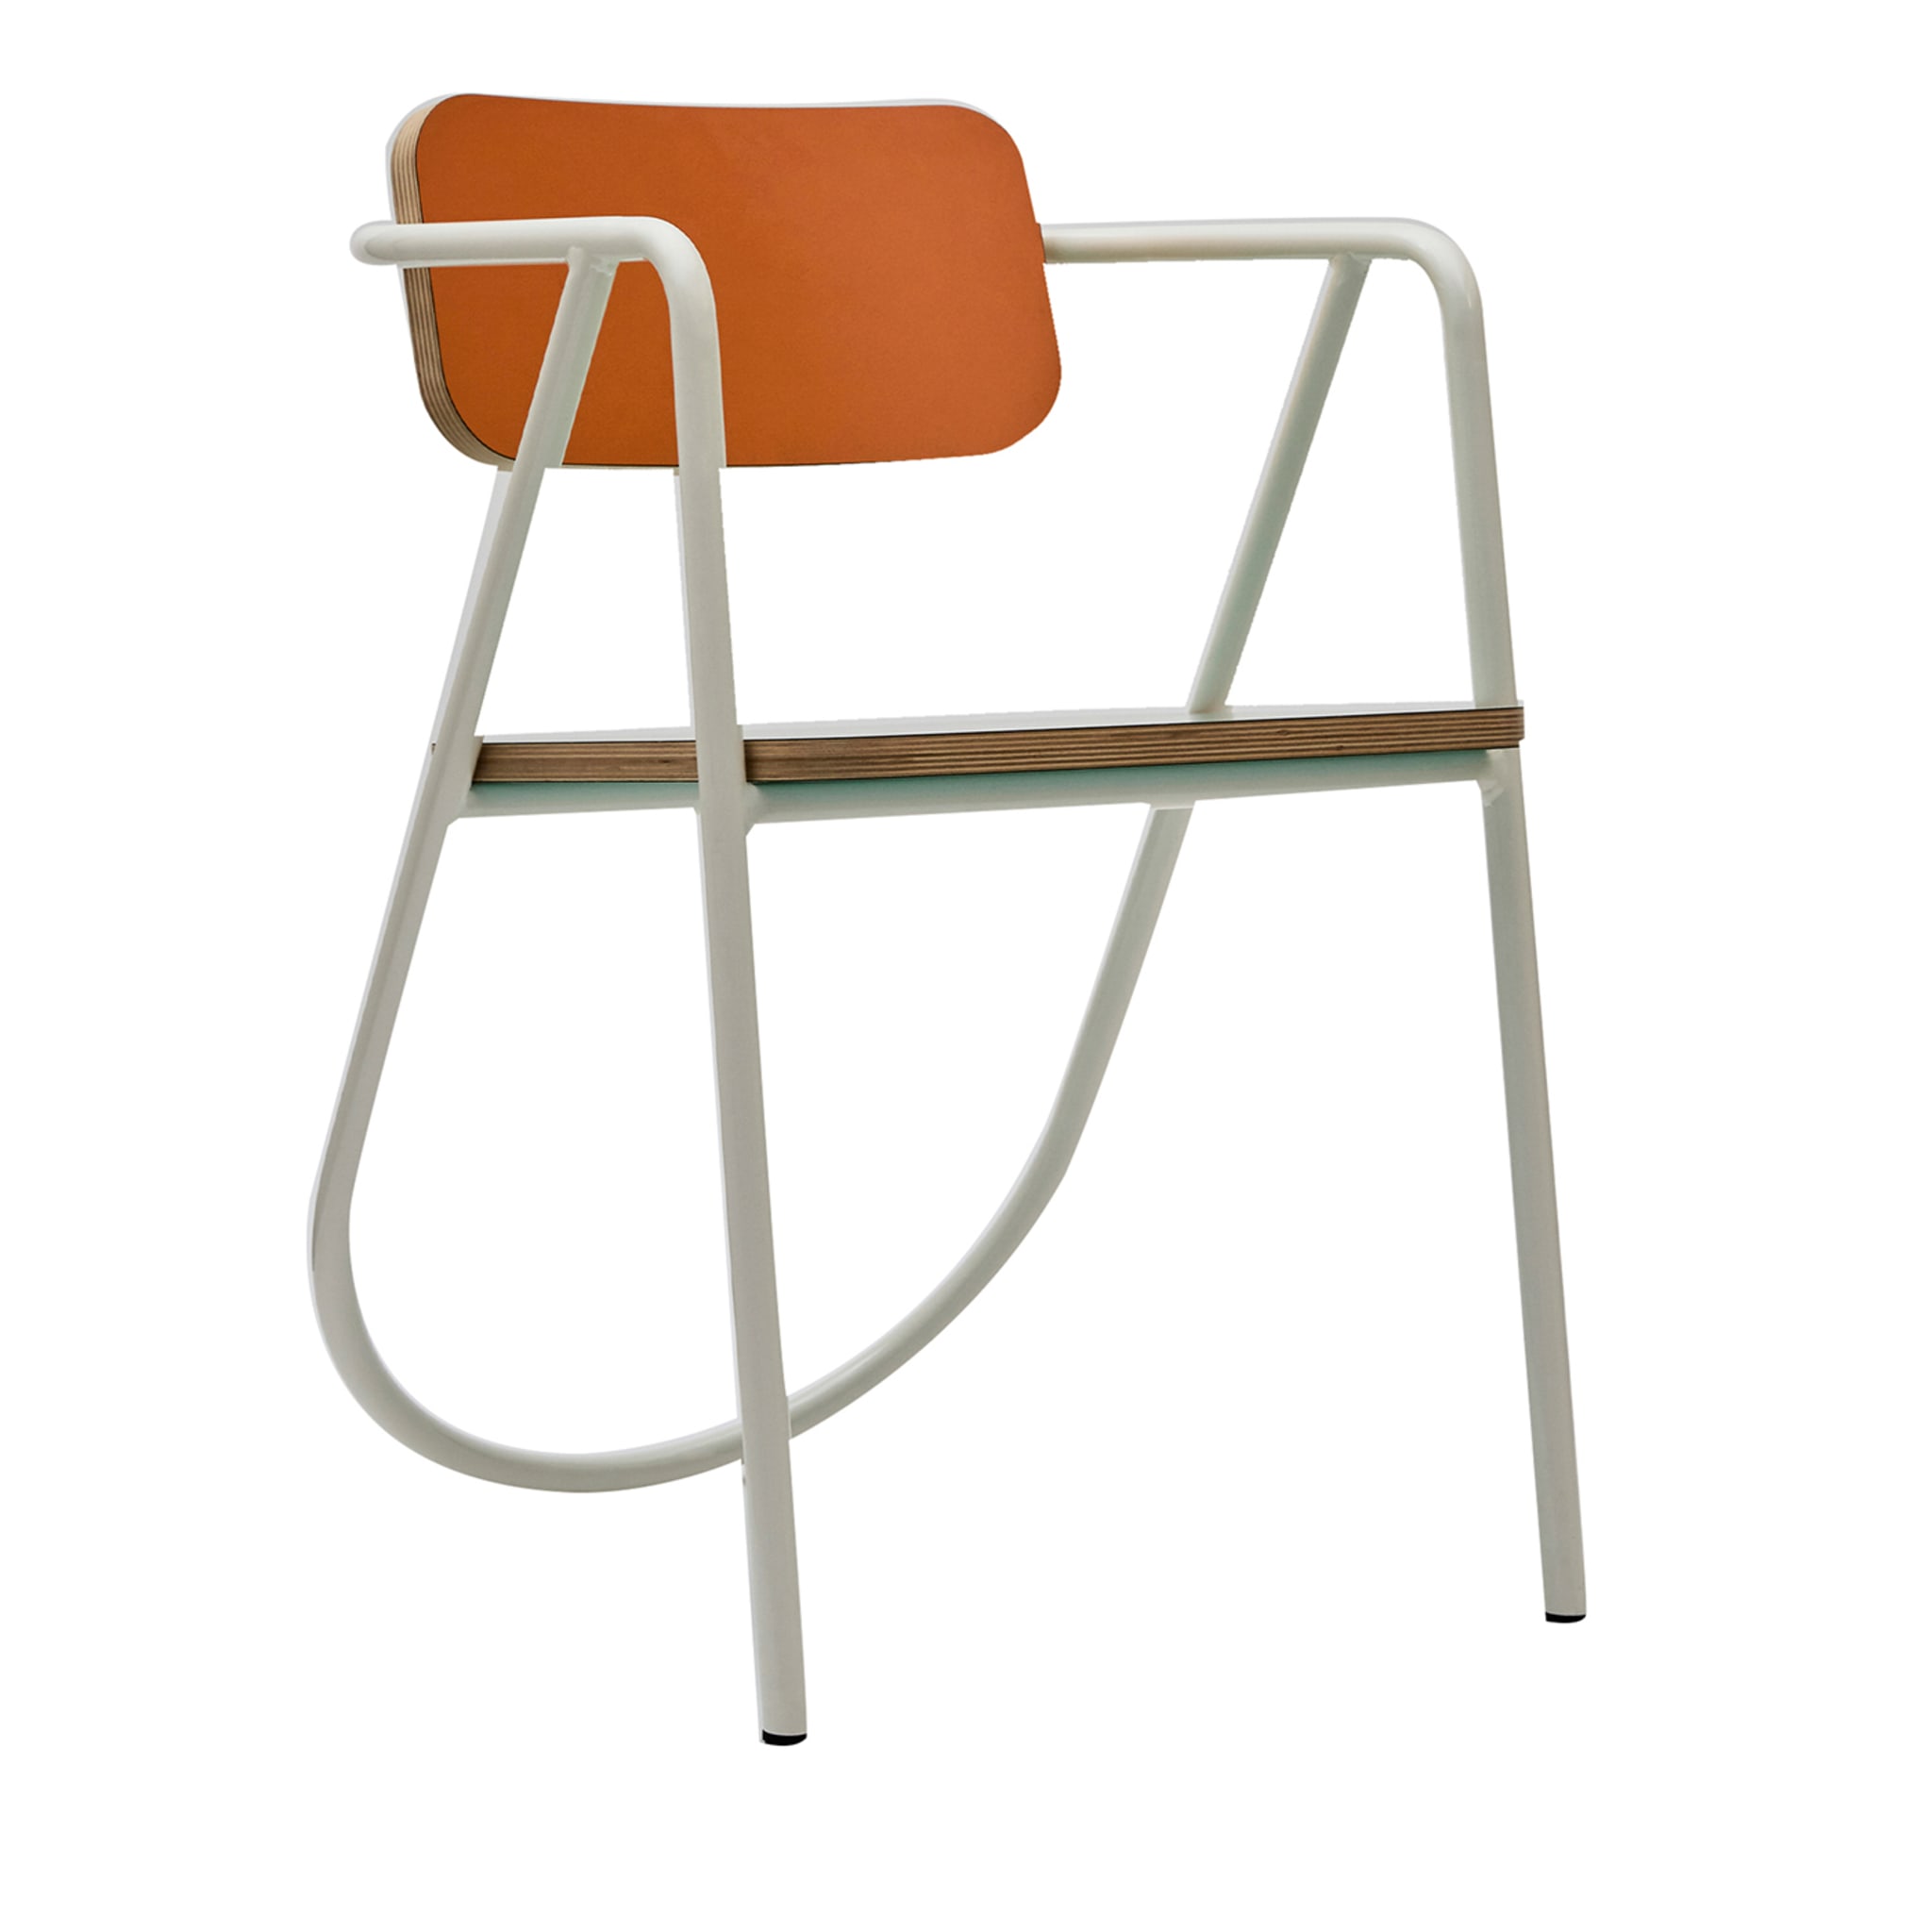 La Misciù White/Teal/Orange Chair  - Main view